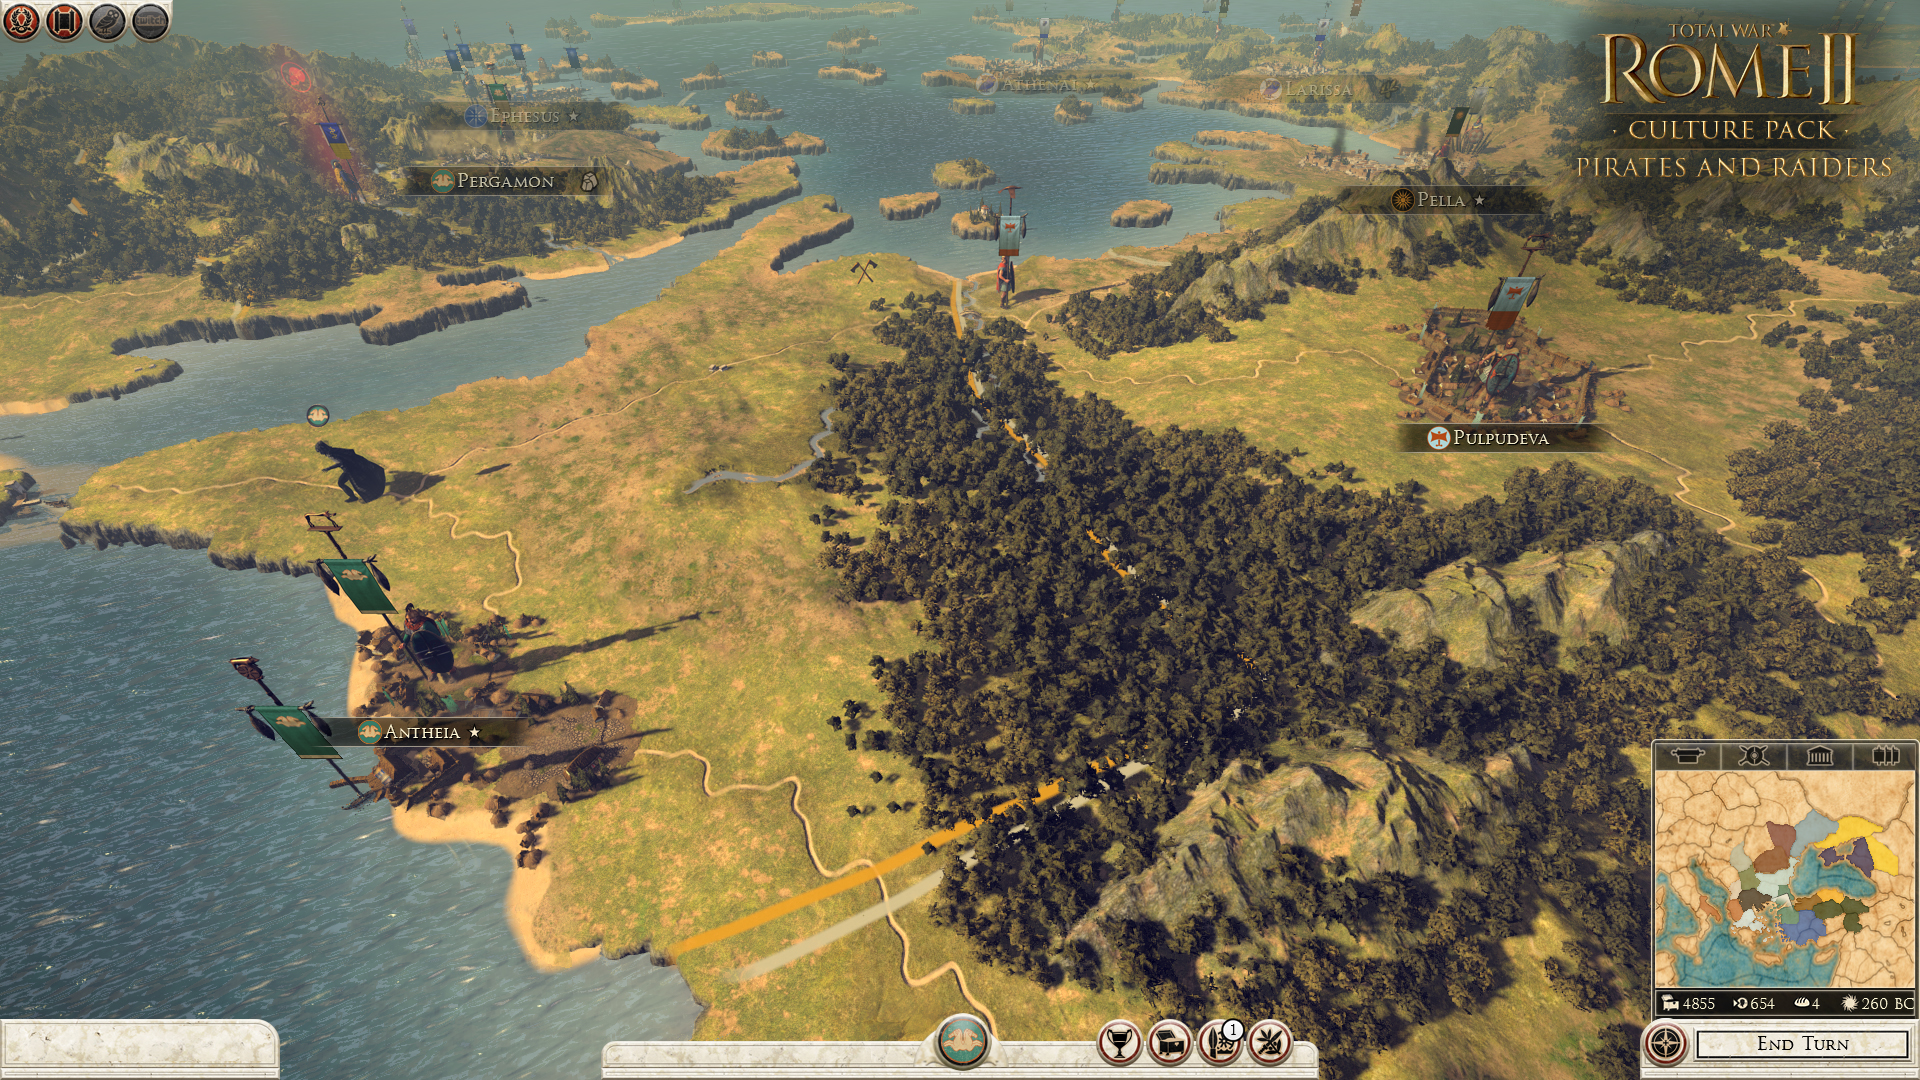 Total War: ROME II - Pirates and Raiders Culture Pack screenshot